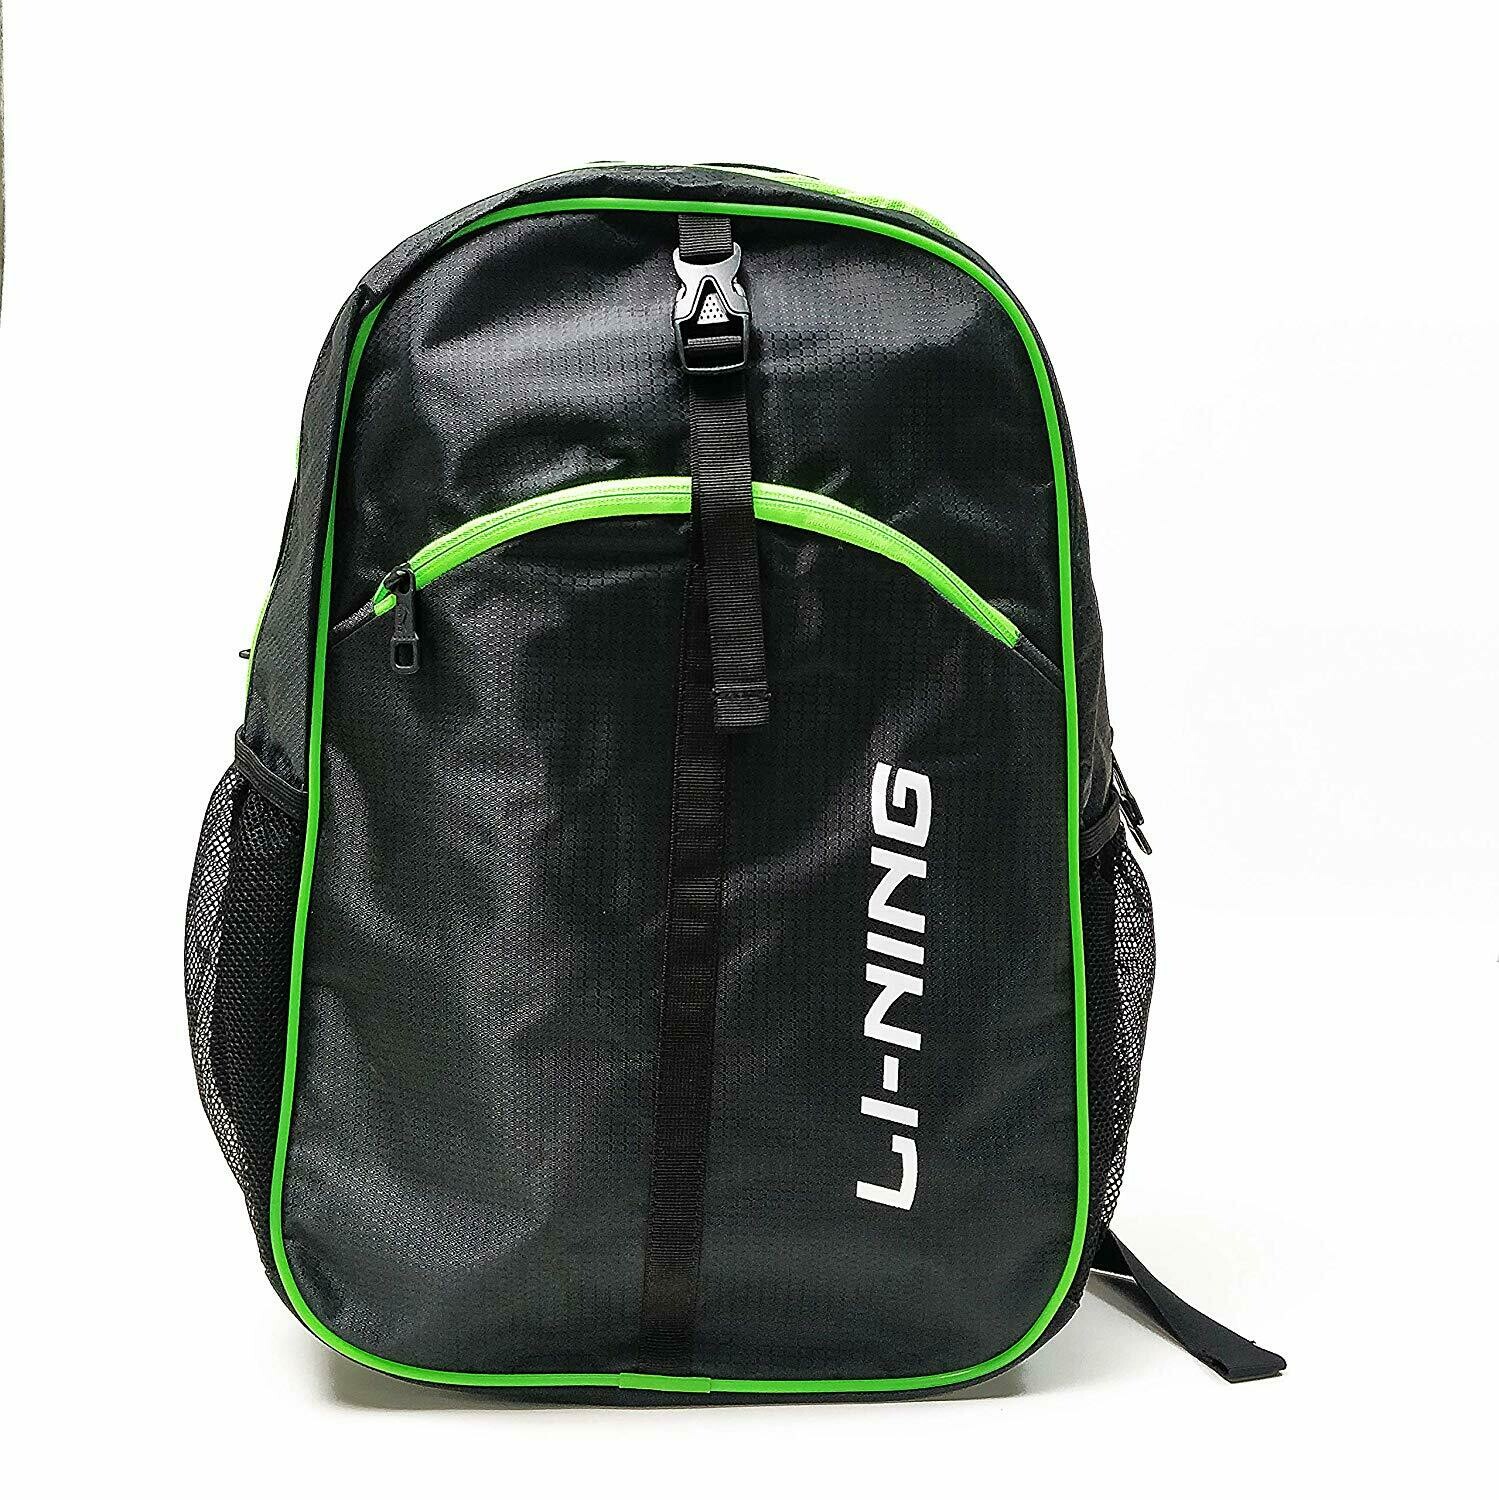 LI-NING ABSN326-1 Green Backpack